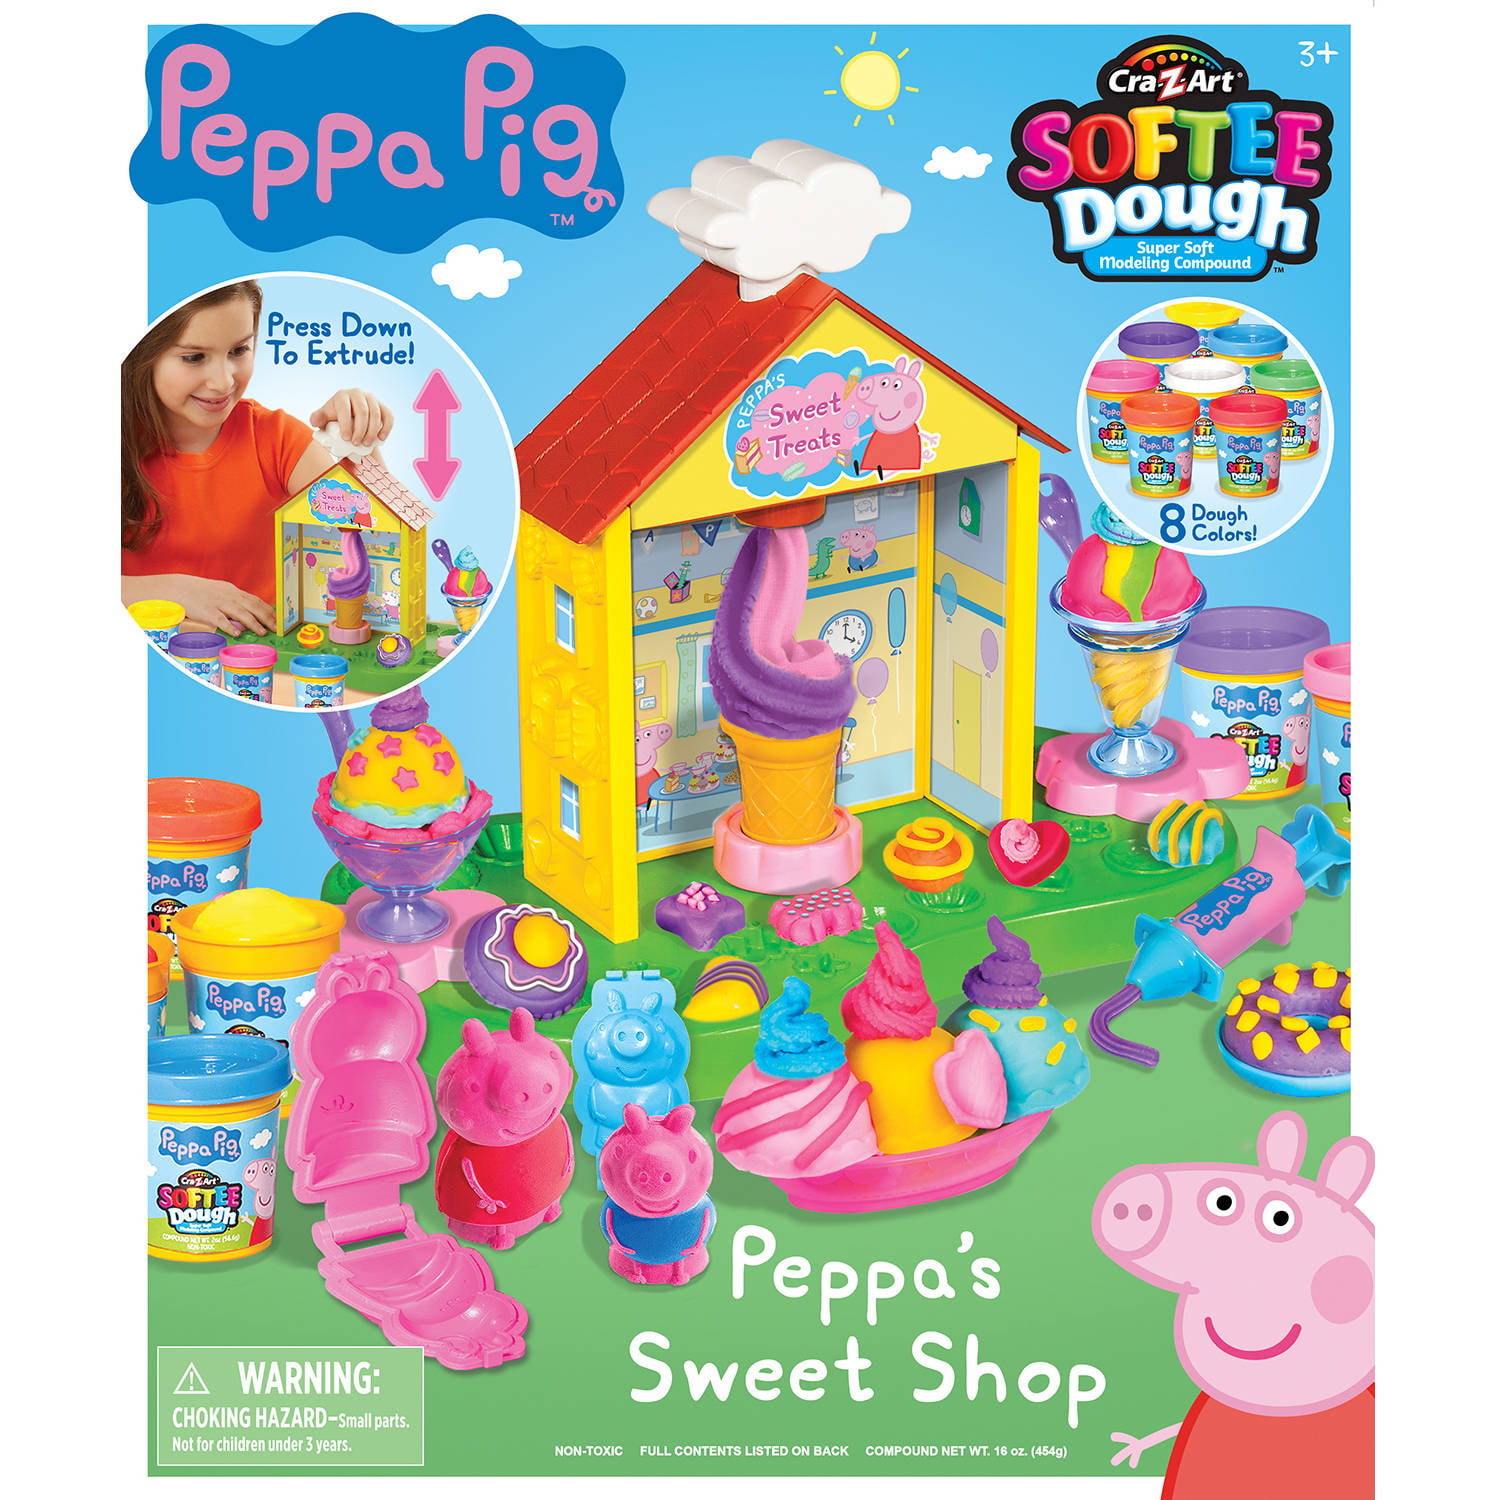 Peppa Pig CRA-Z-ART Softee Dough Mold N' Ply 3d Figure Maker 2016 for sale online